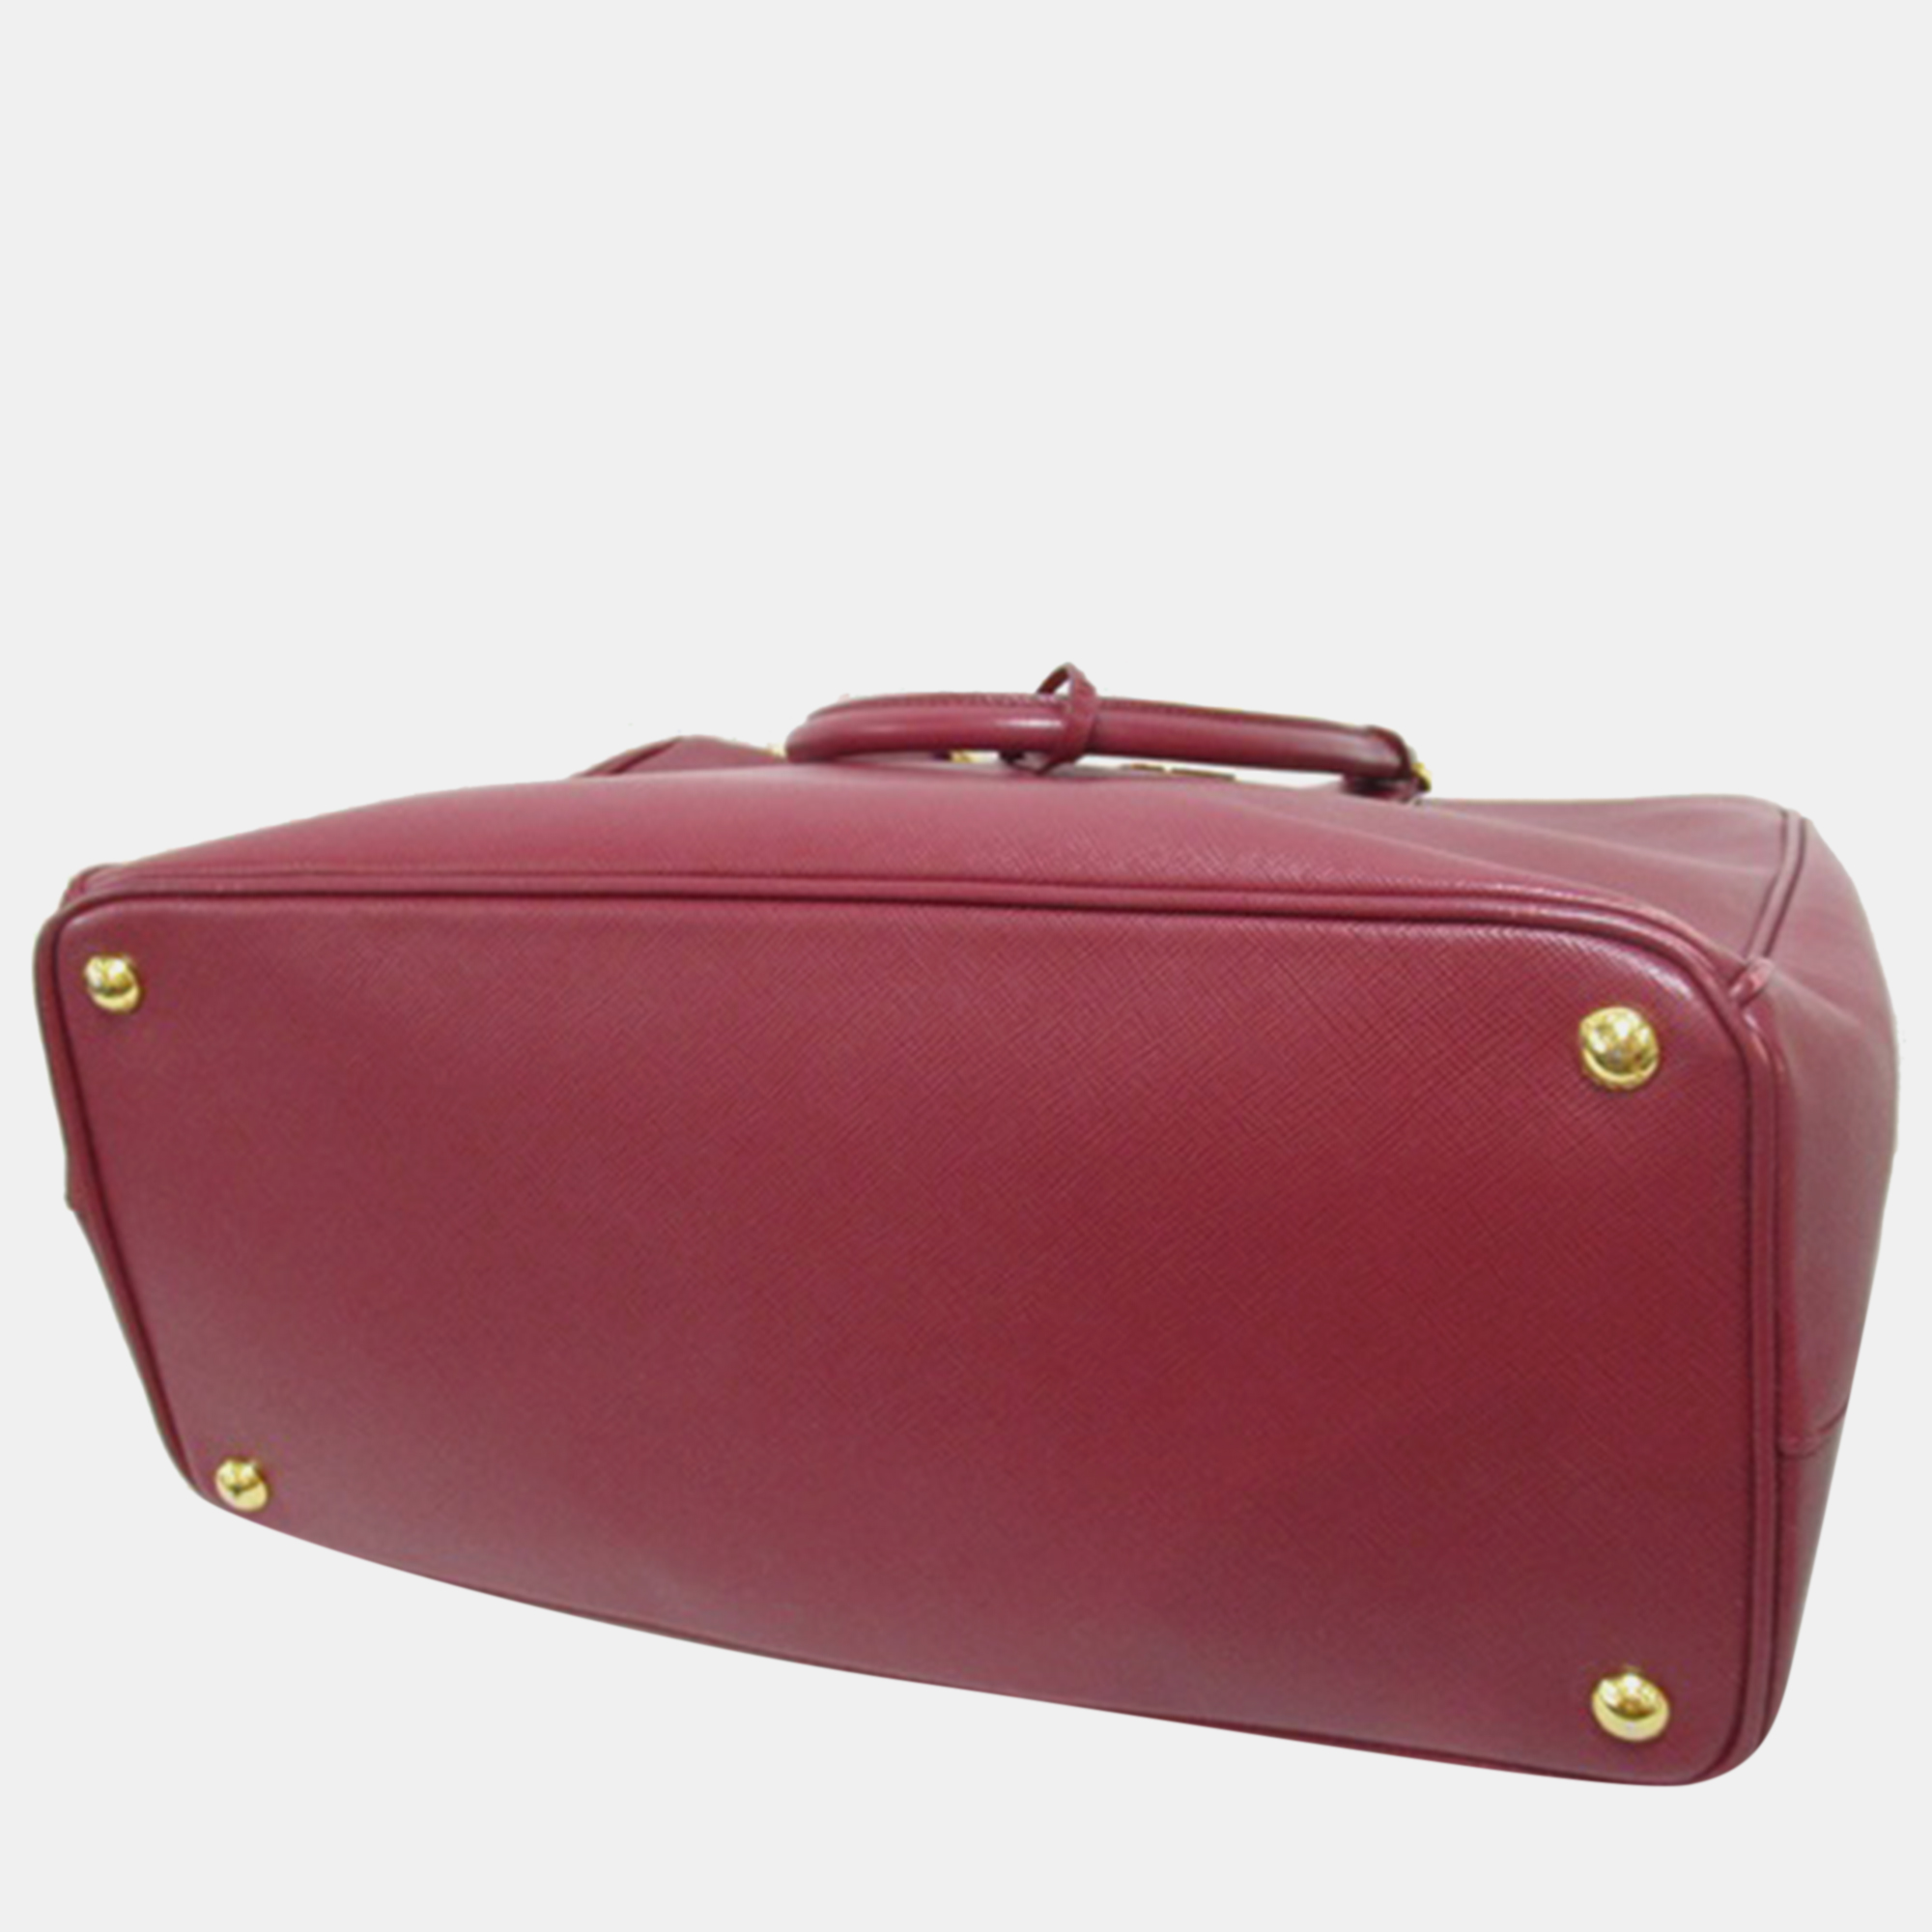 Prada Red Leather Saffiano Double Zip Tote Bag